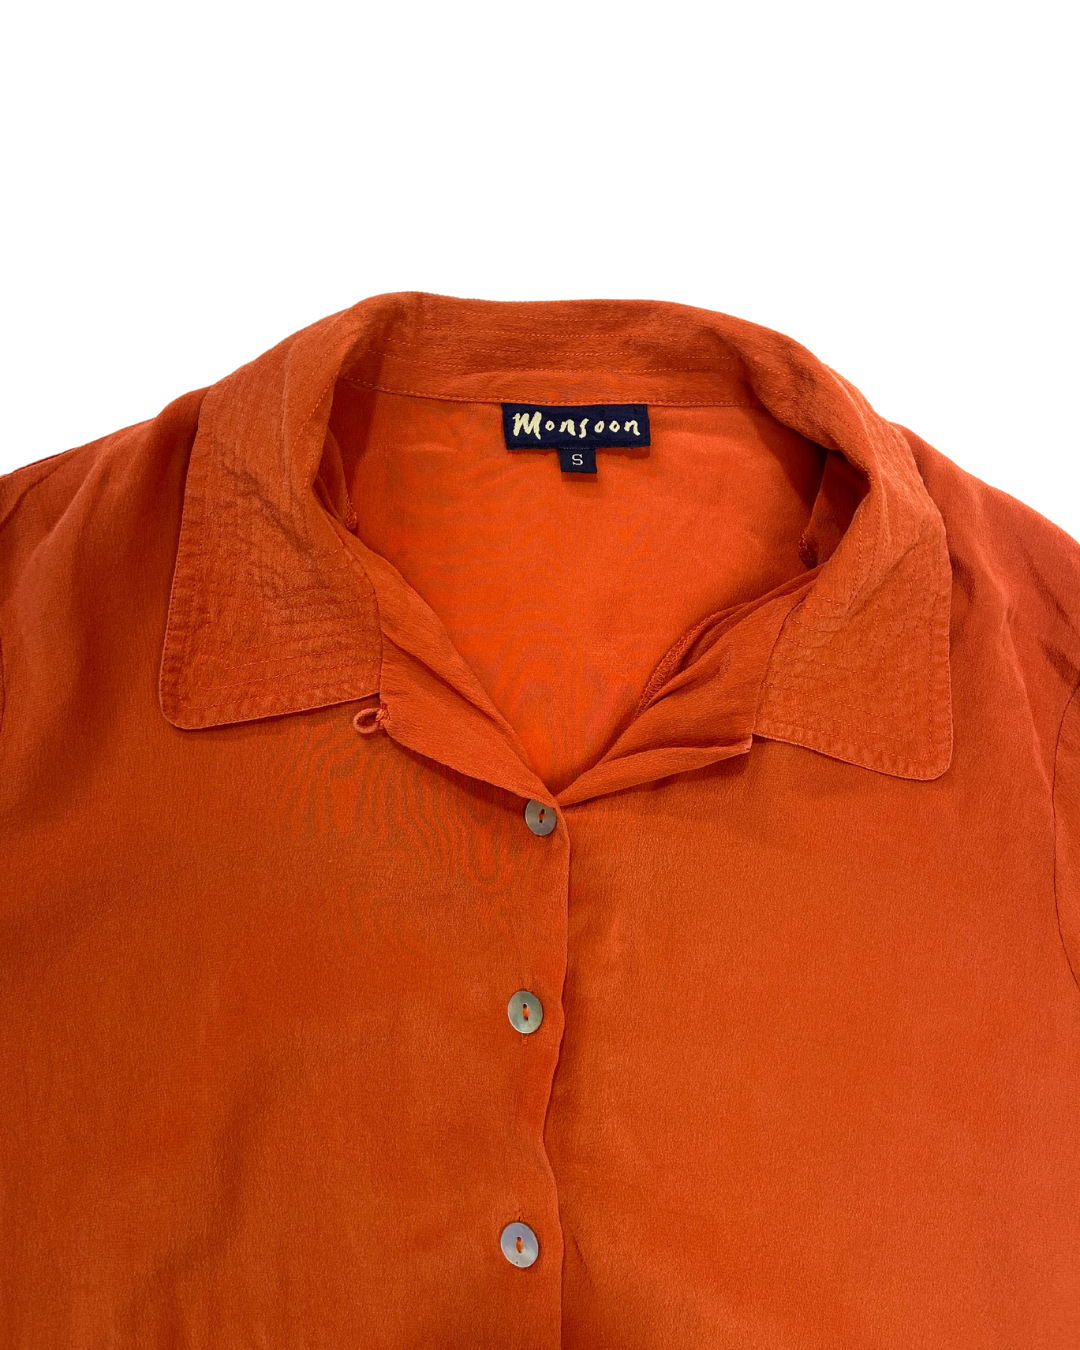 Monsoon Orange Shirt